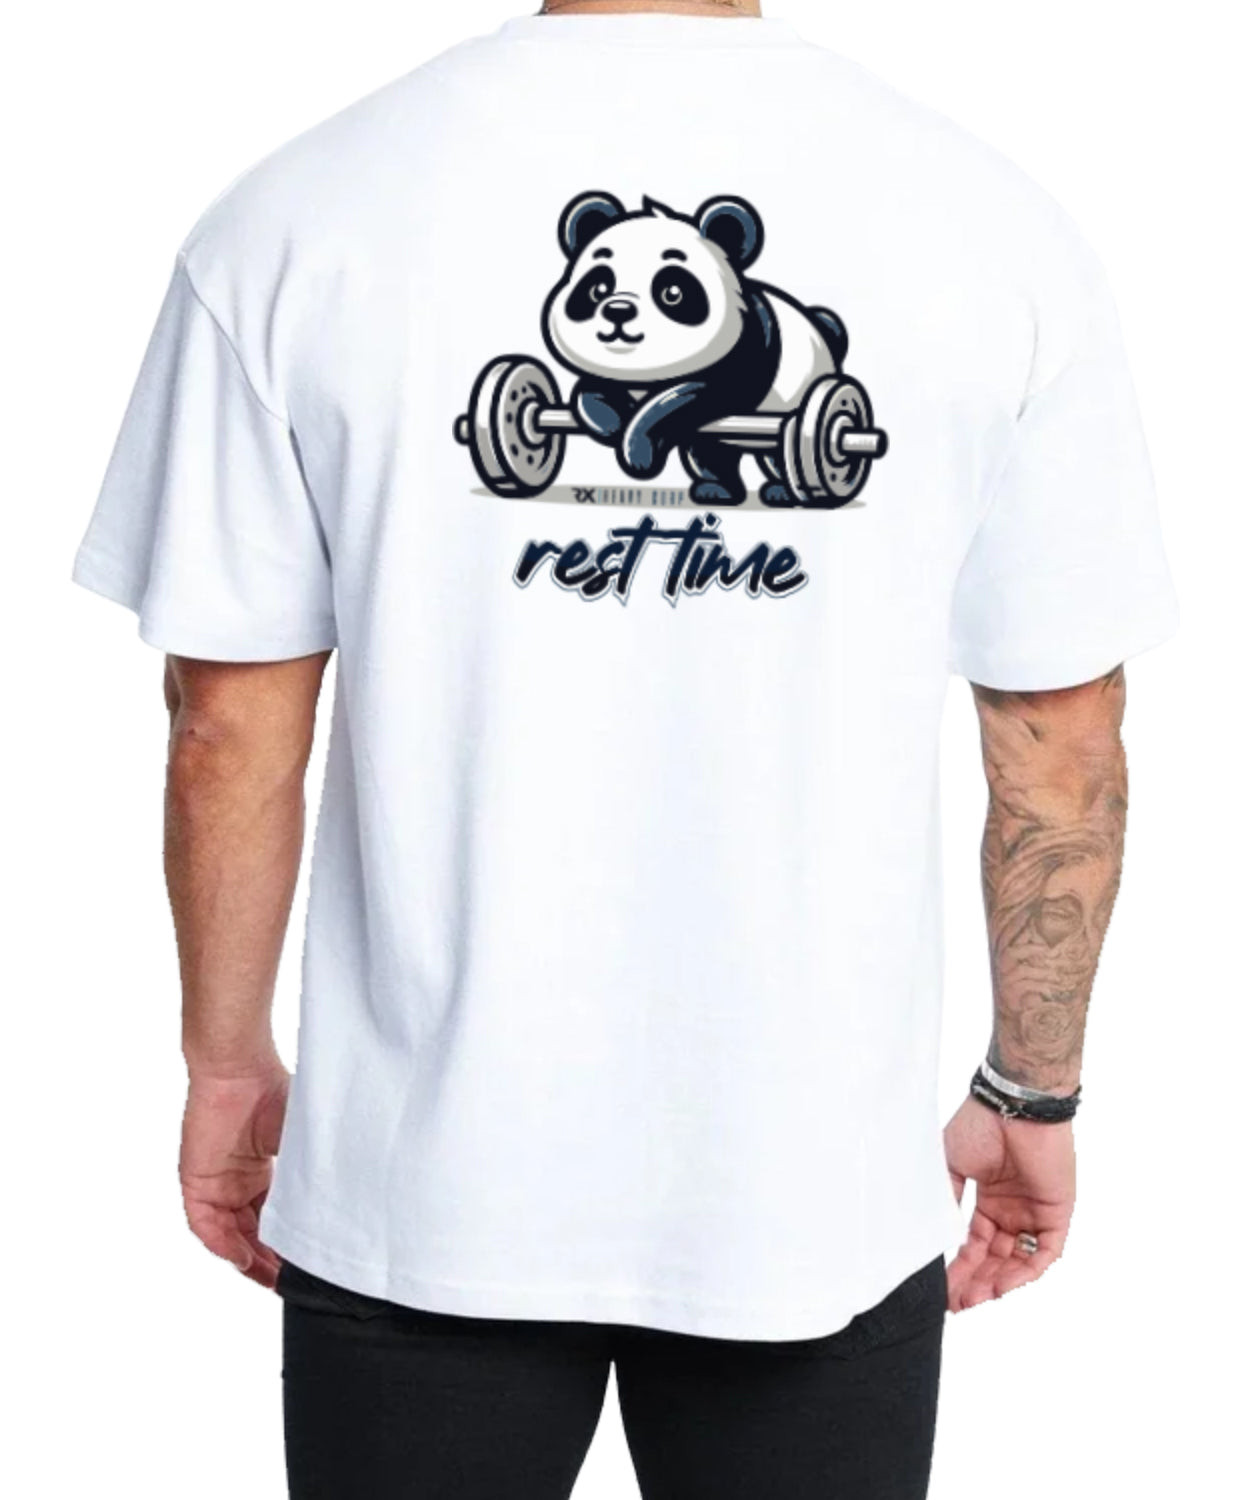 Camiseta Oversize algodón 100% - Rest Time PANDA - blanca